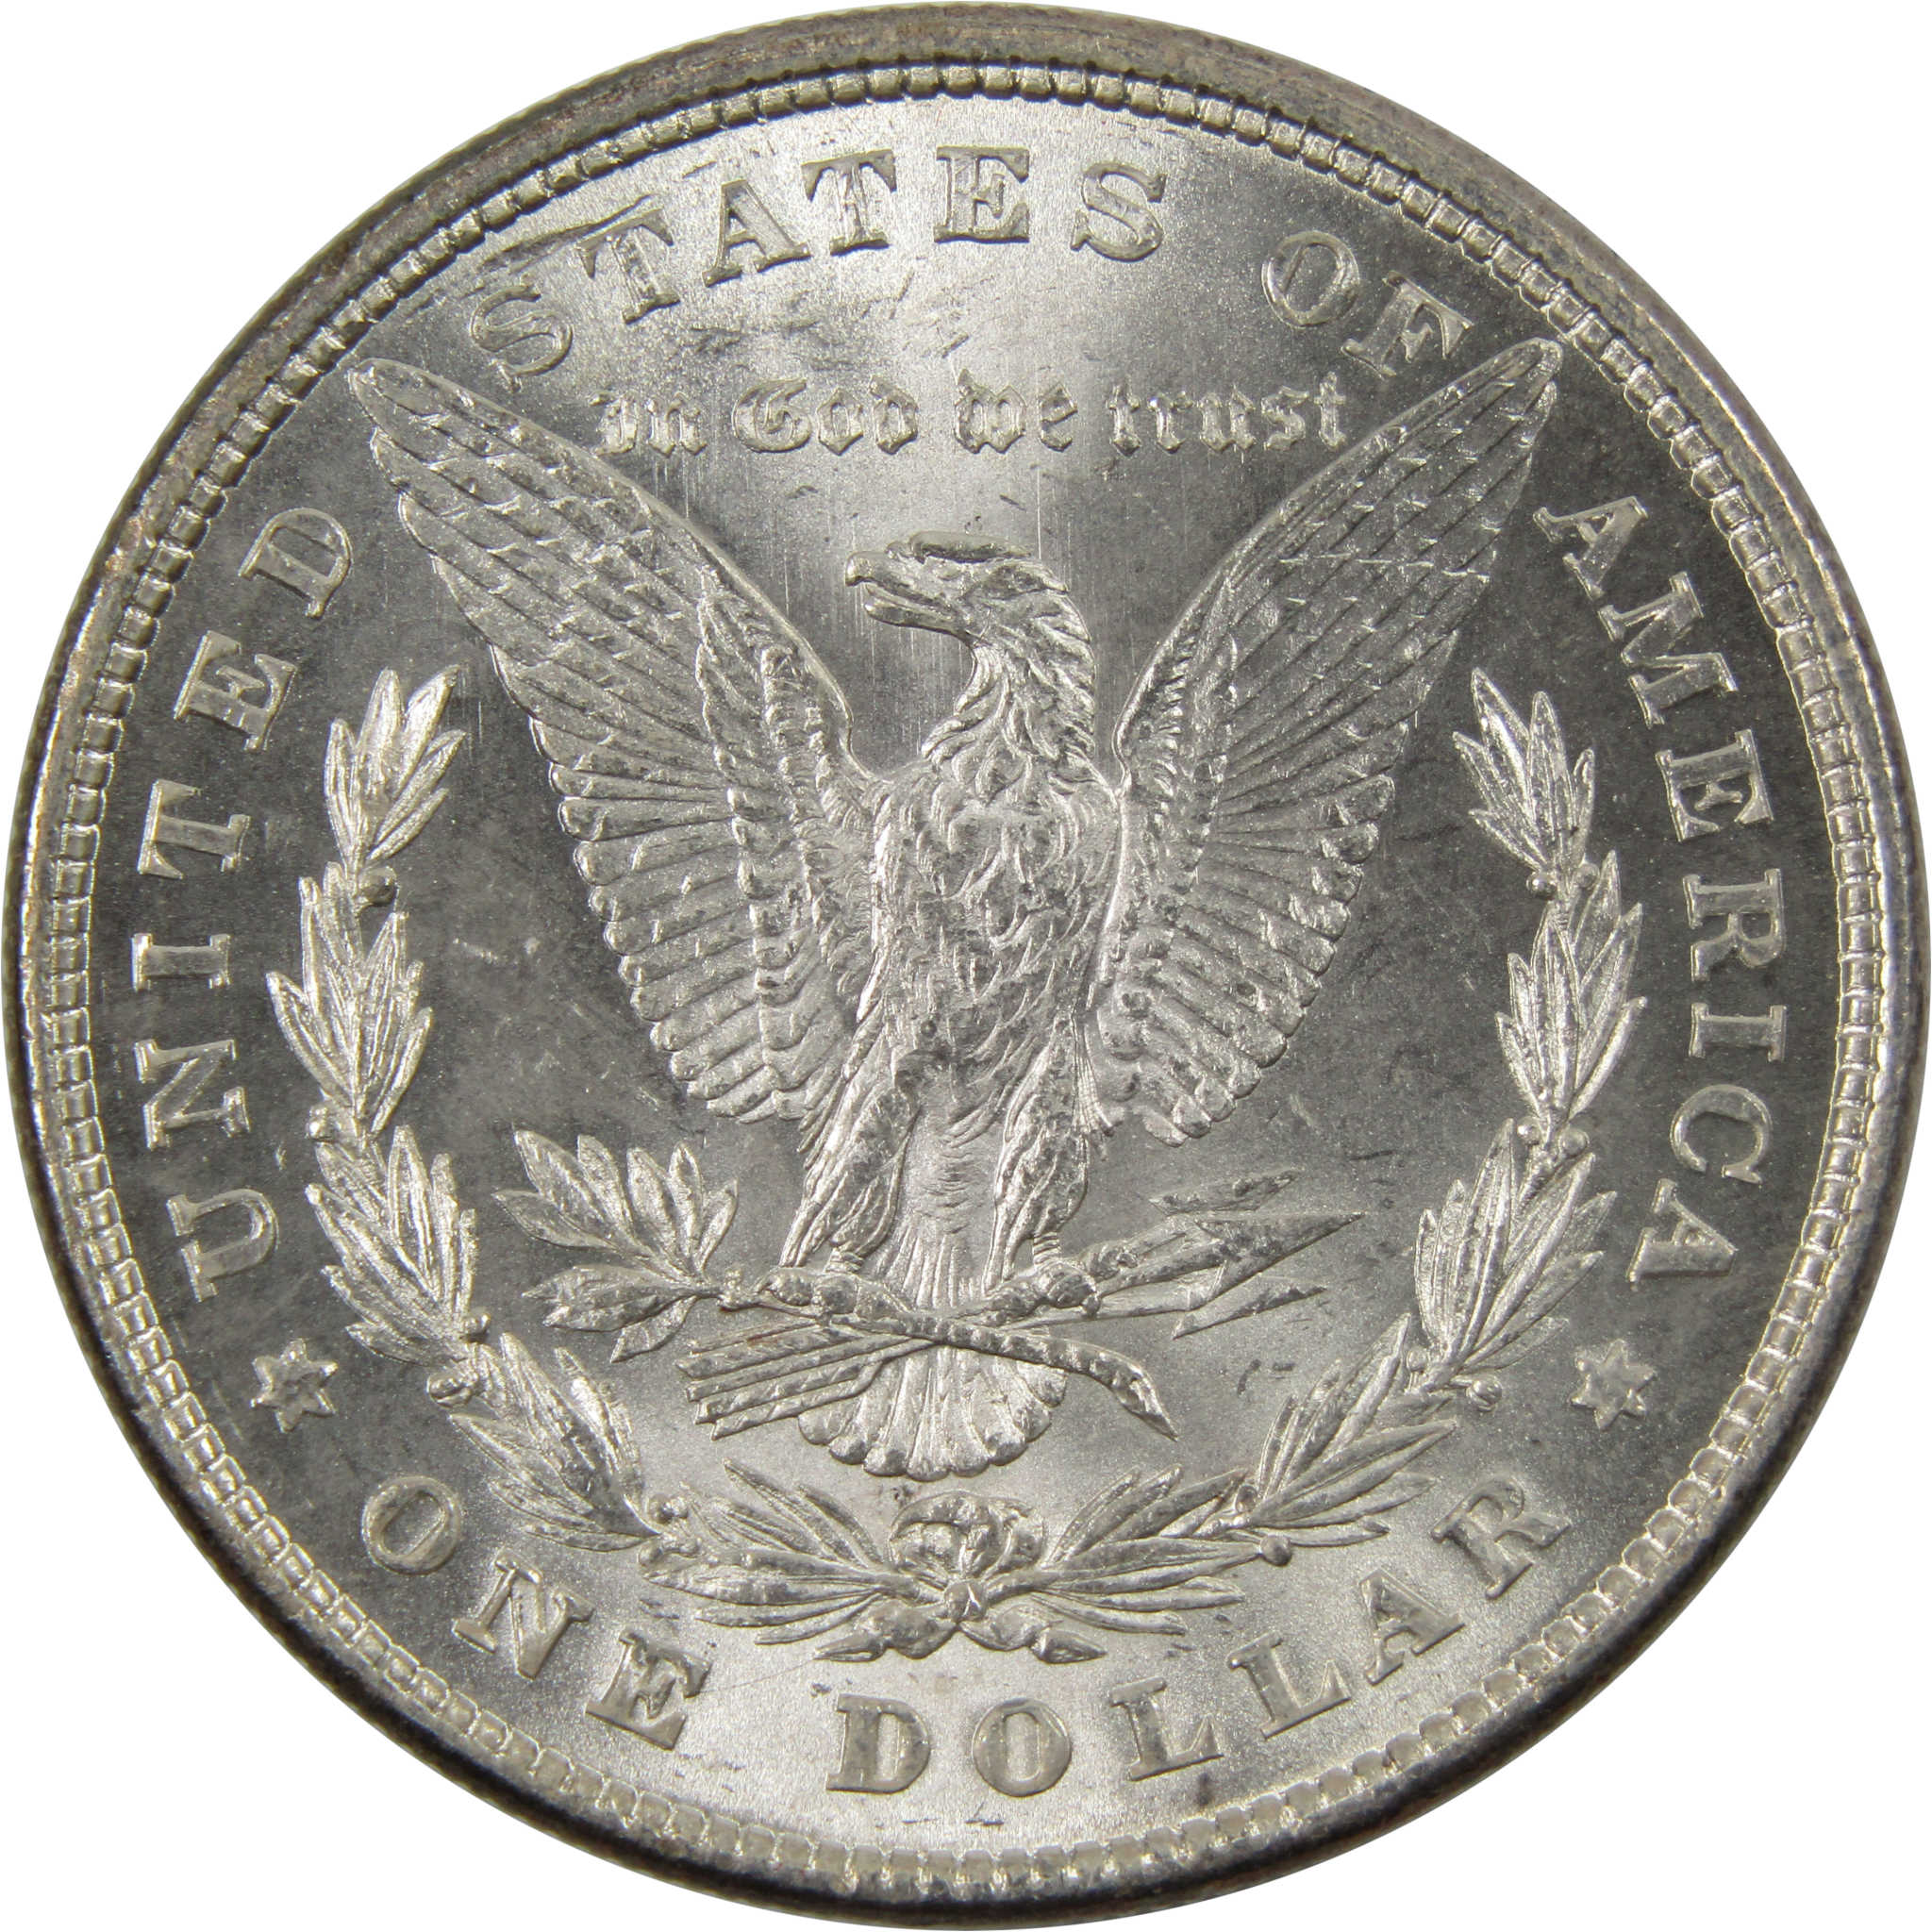 1878 8TF Morgan Dollar BU Choice Uncirculated Silver $1 SKU:I10177 - Morgan coin - Morgan silver dollar - Morgan silver dollar for sale - Profile Coins &amp; Collectibles